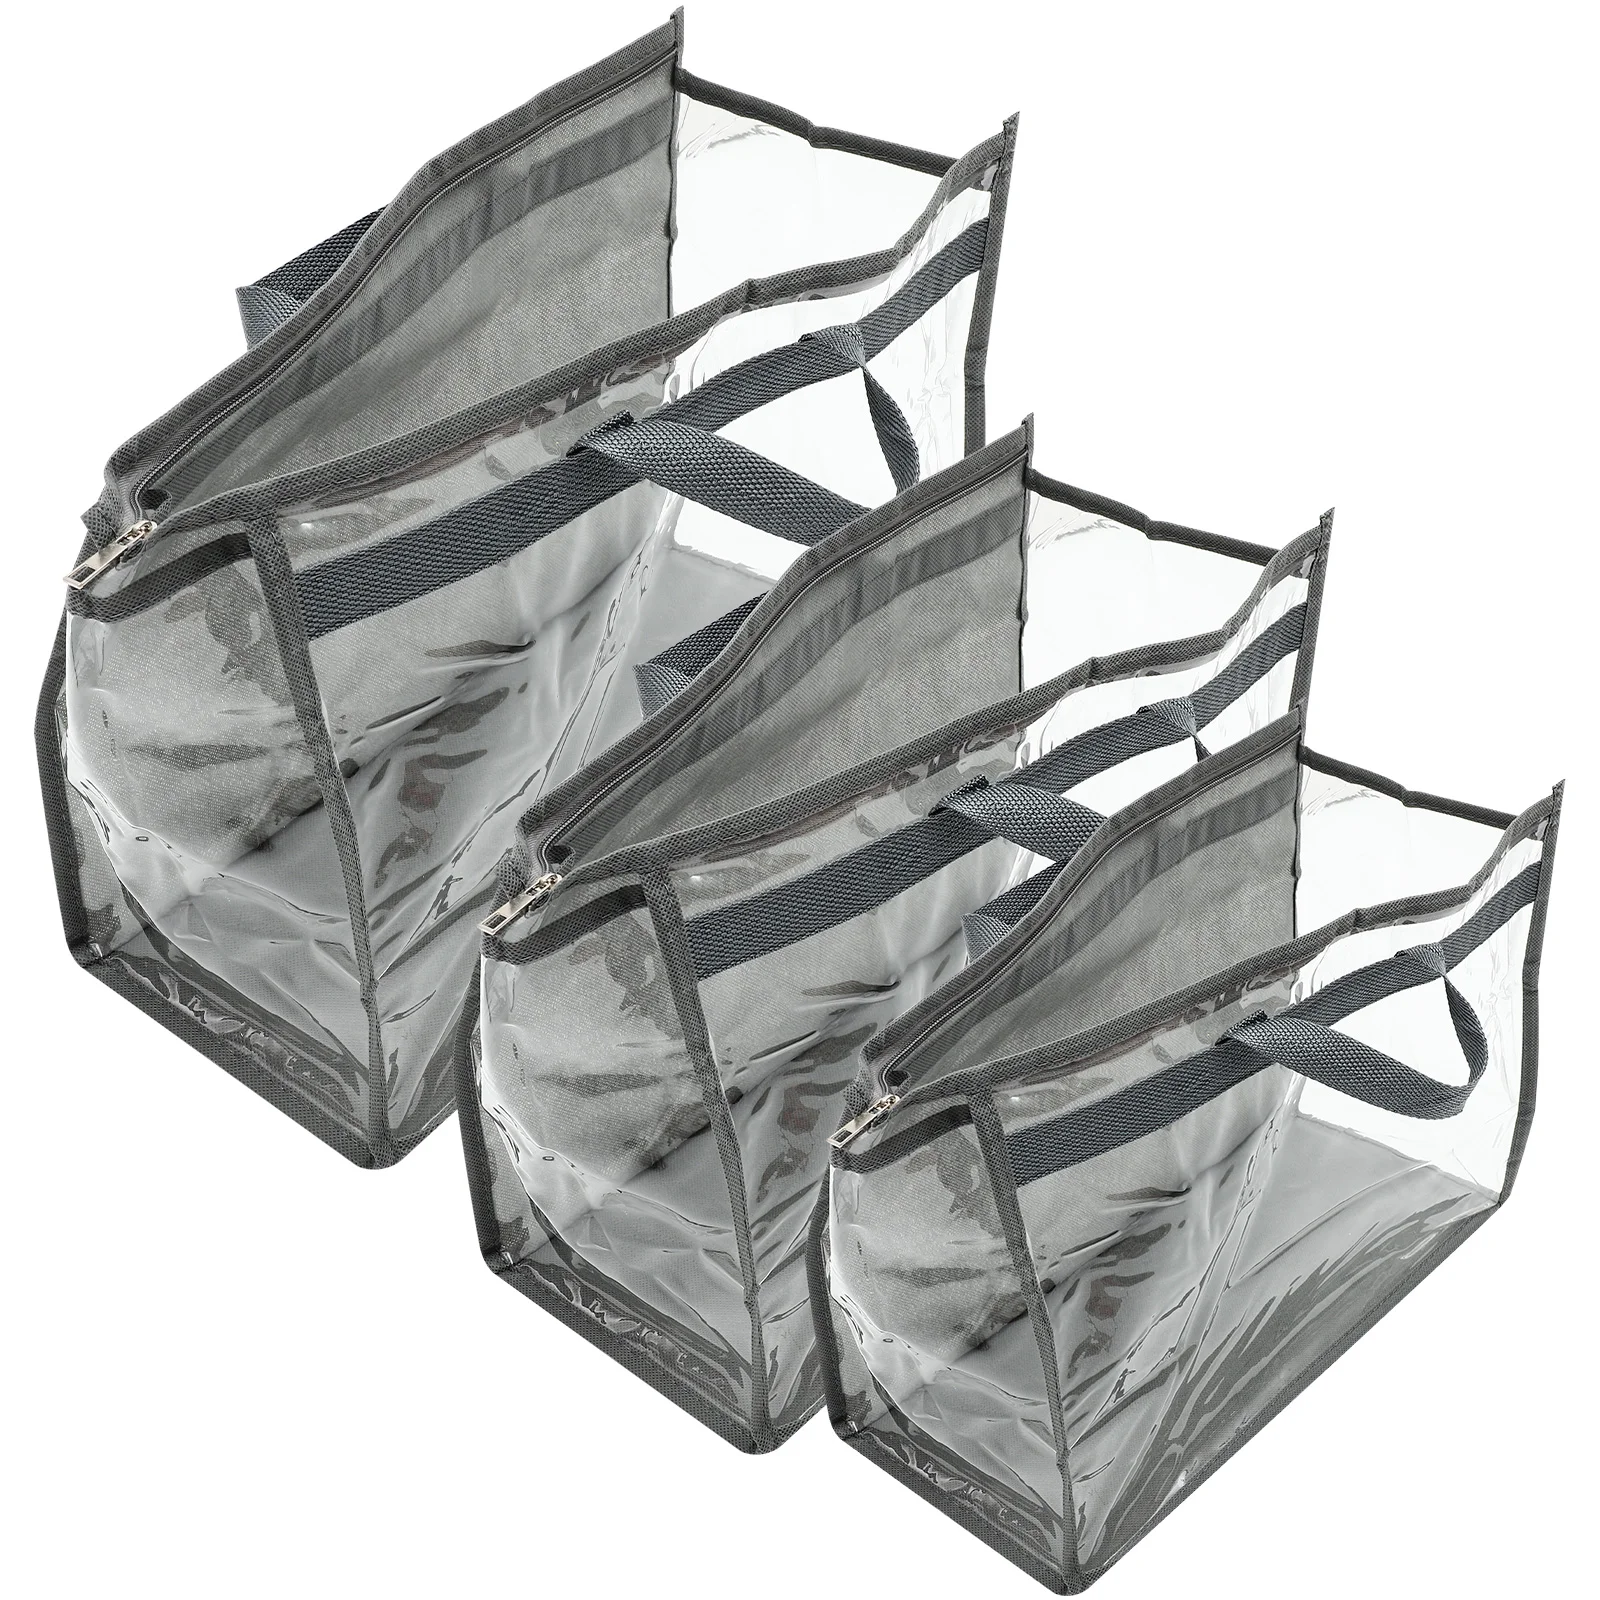 

3 Pcs Bag Dustproof Hanging Handbag Organizers Tote Clear Zippered Storage Bags Closet Purse PVC Pouches Home Supplies